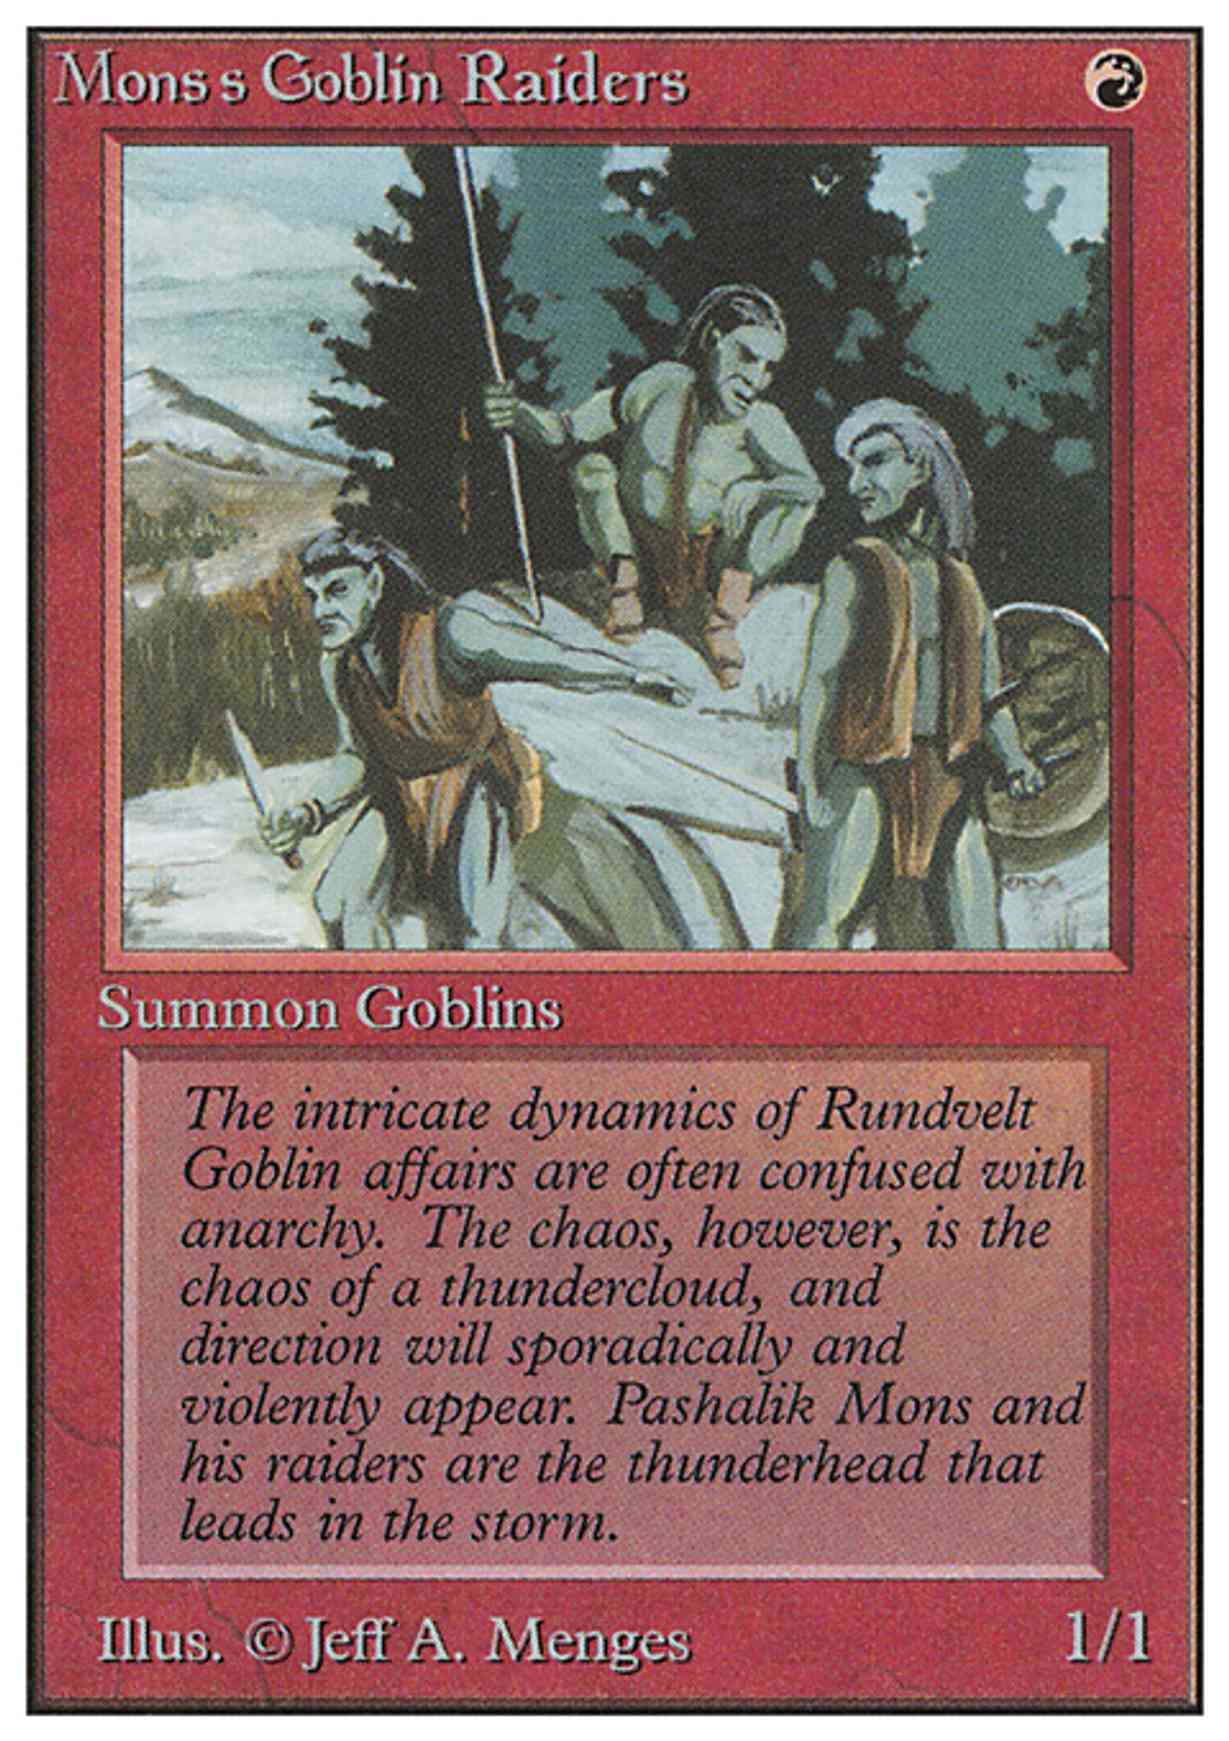 Mons's Goblin Raiders magic card front